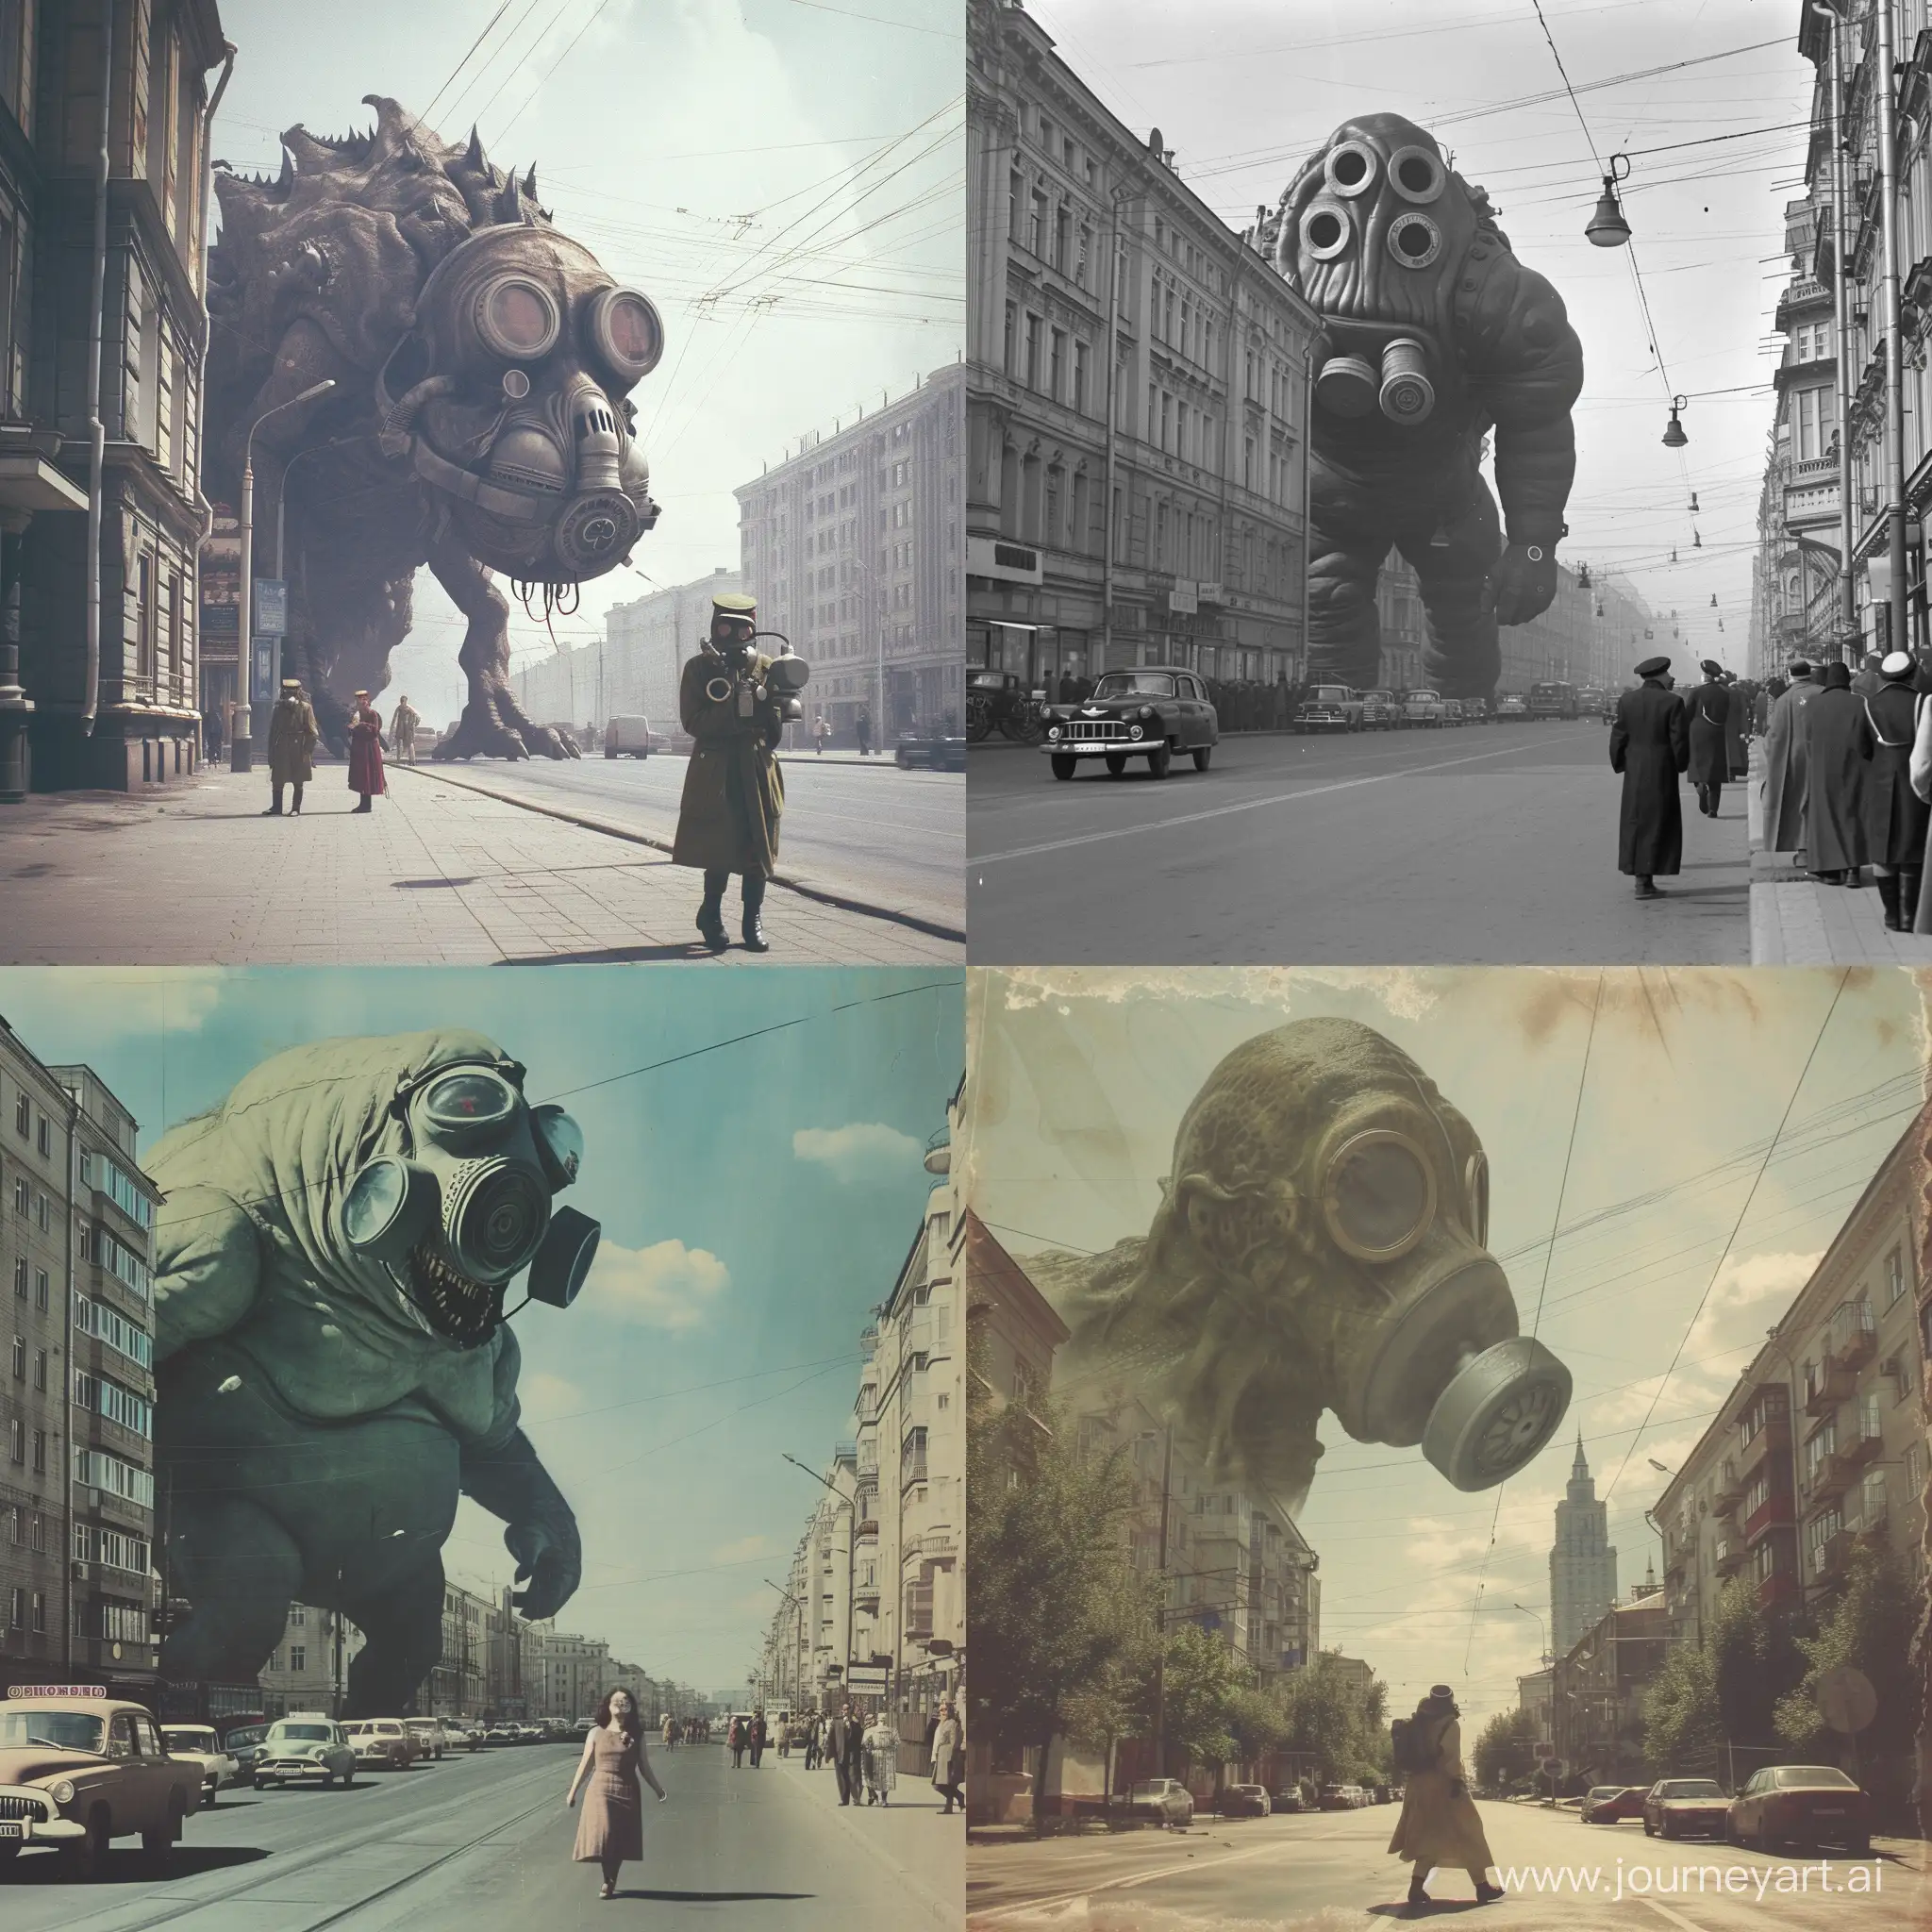 Soviet-Union-Street-Scene-with-Massive-Gas-Mask-Monster